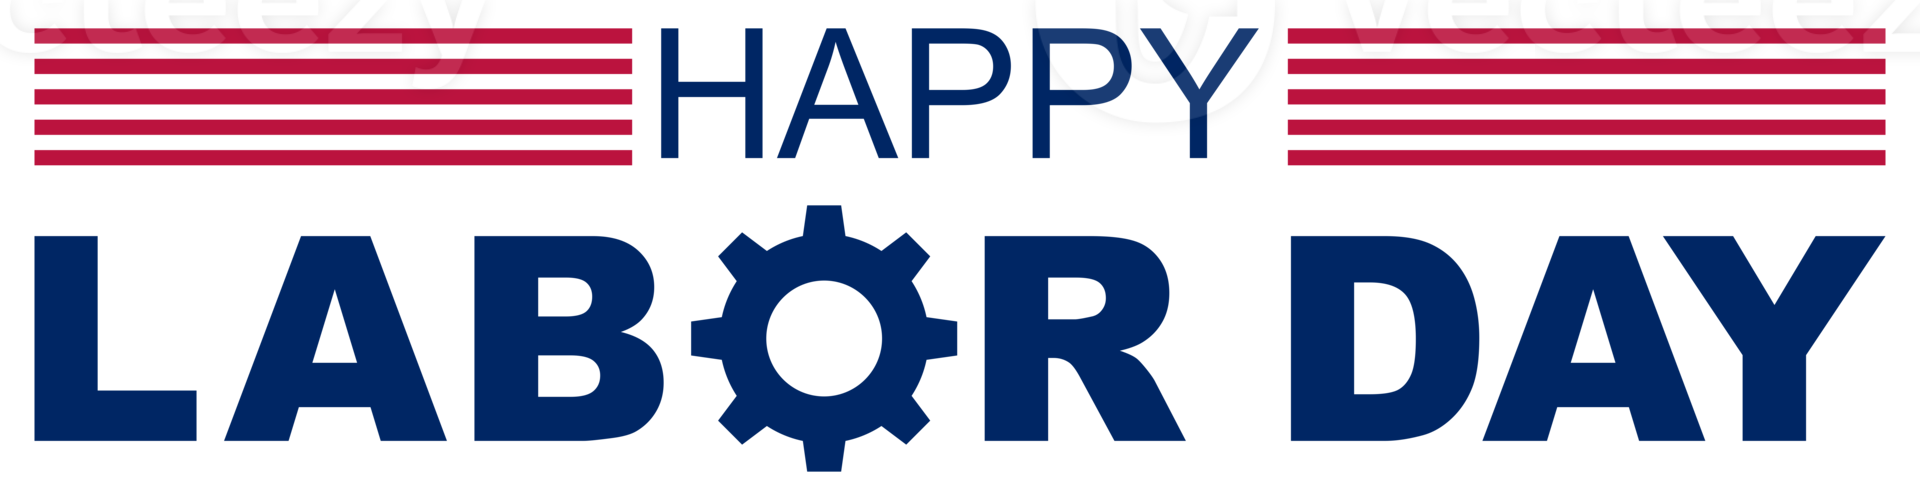 Happy Labor Day Sign for Icon Symbol, Art Illustration, Poster, Banner, Website or Graphic Design Element. Format PNG